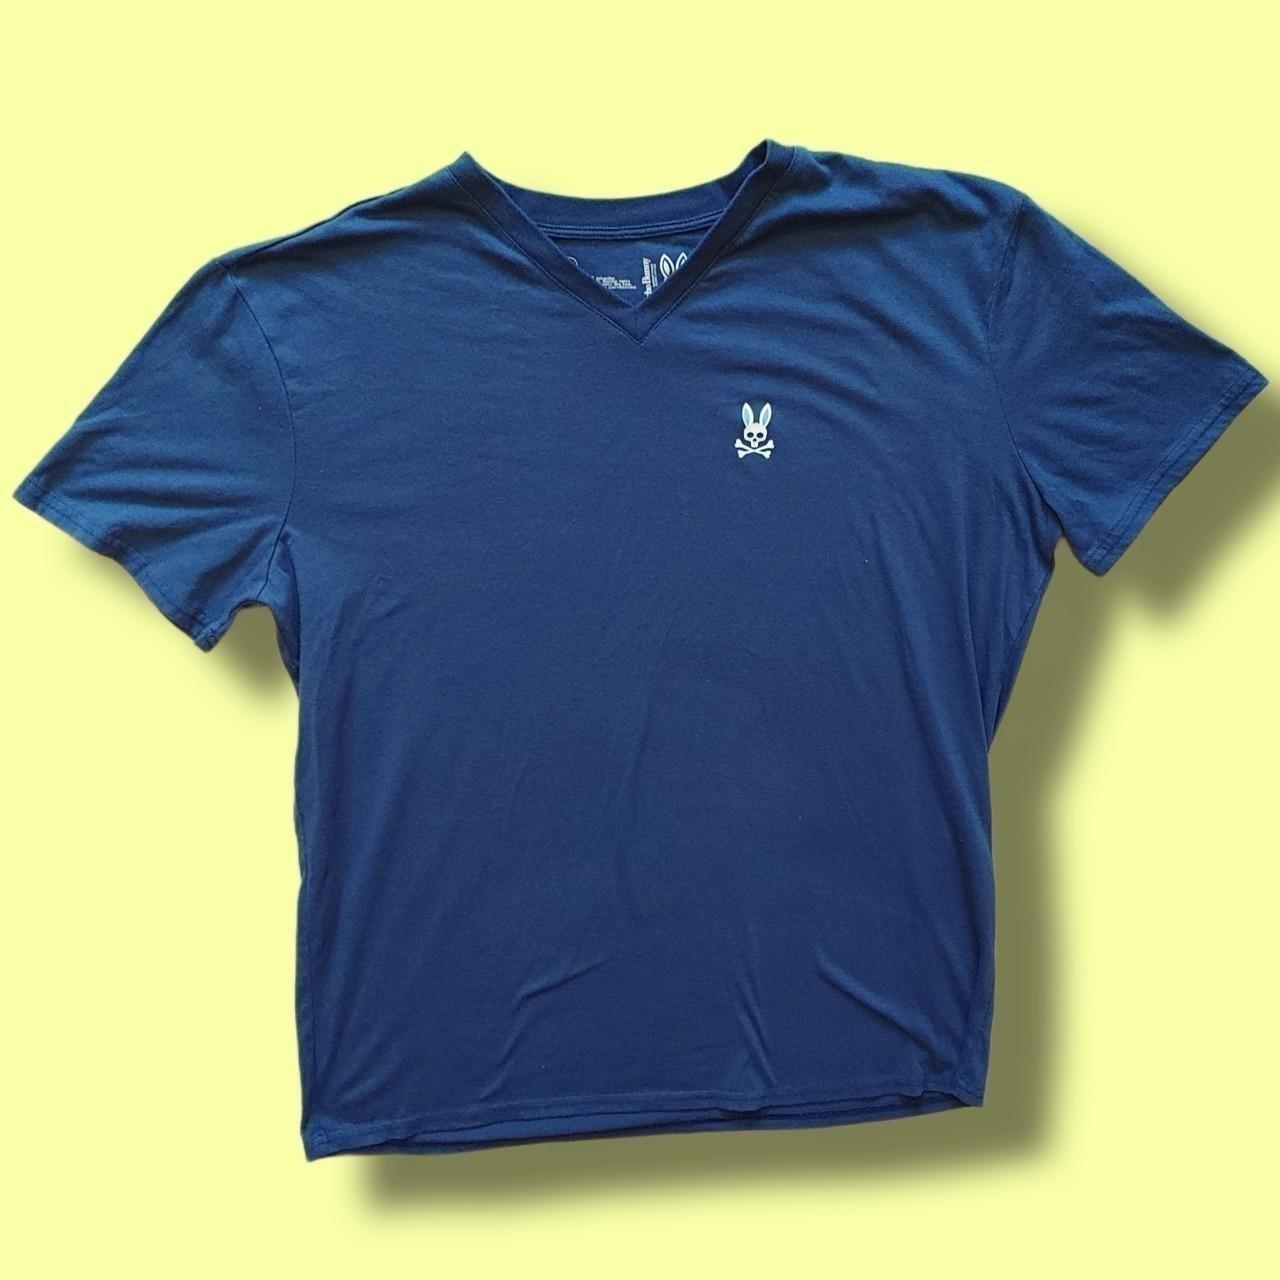 Psycho Bunny Men's Navy and Blue T-shirt